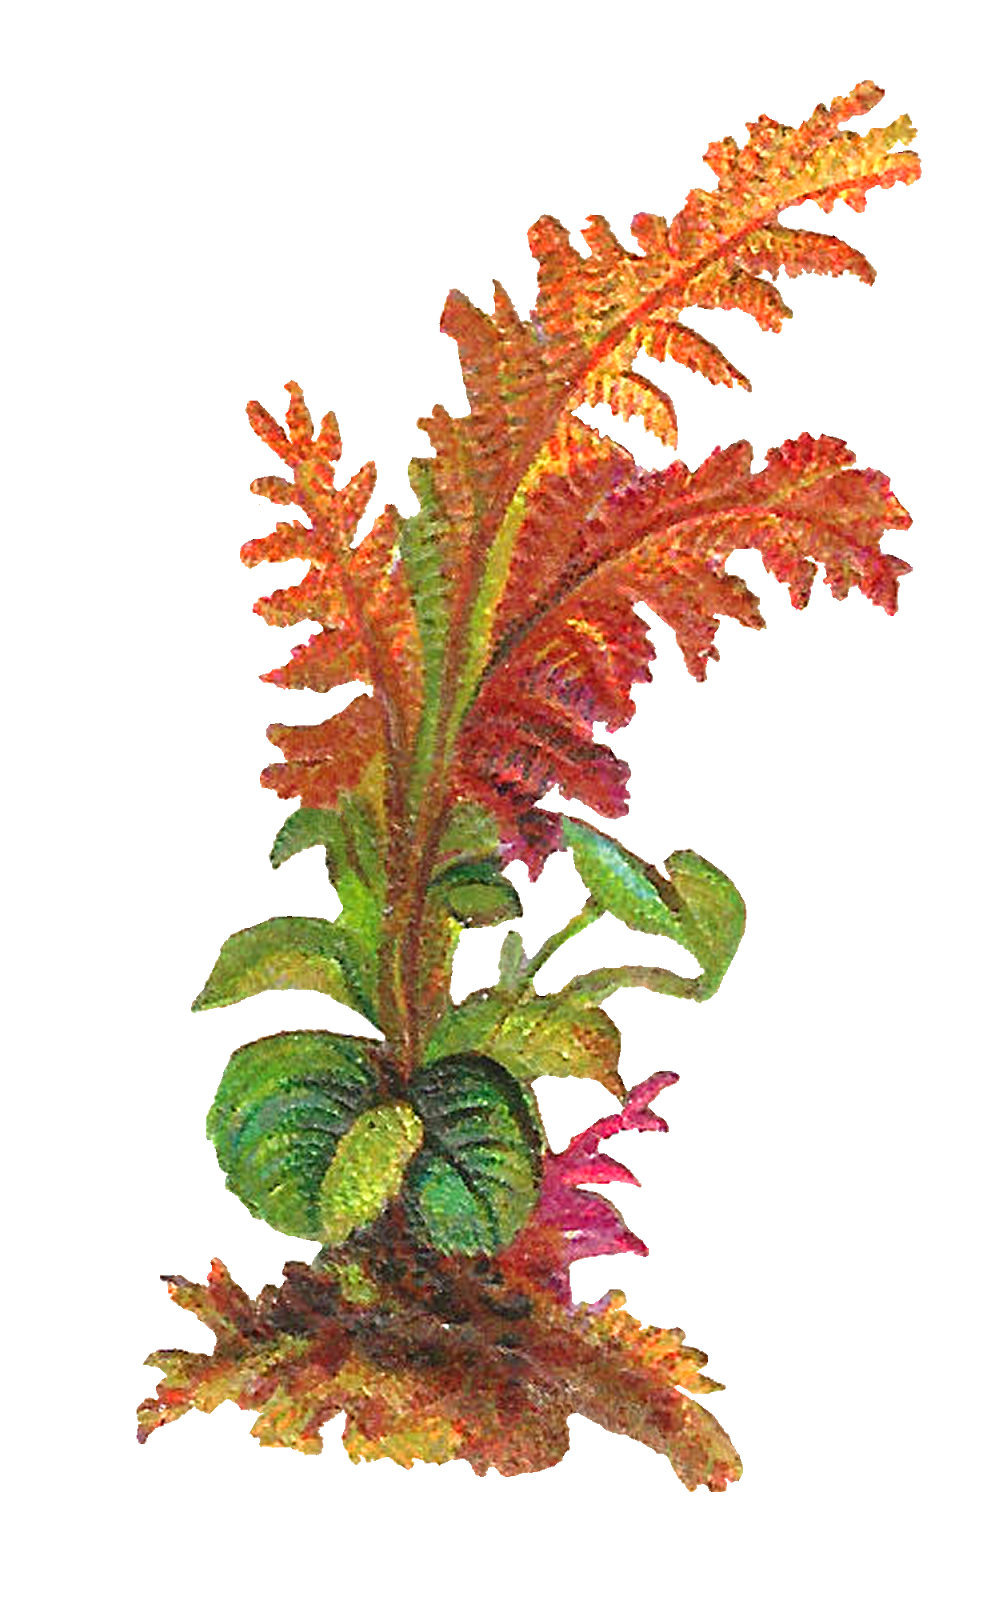 Clipart leaf fern. Antique images forest plant